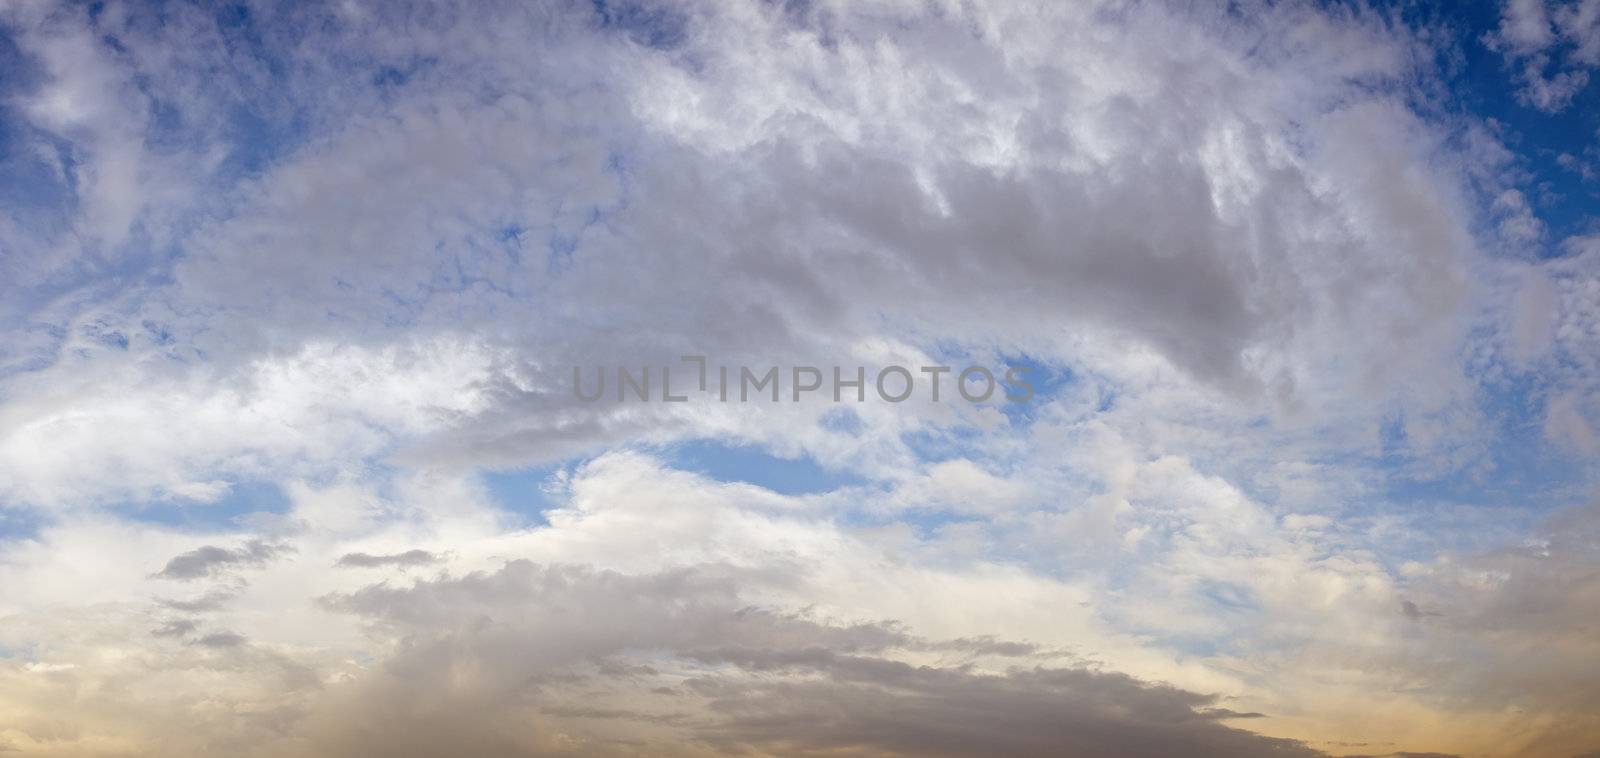 Panoramic view of beautiful cloudy sky - Original size 9500 x 4500 pixels